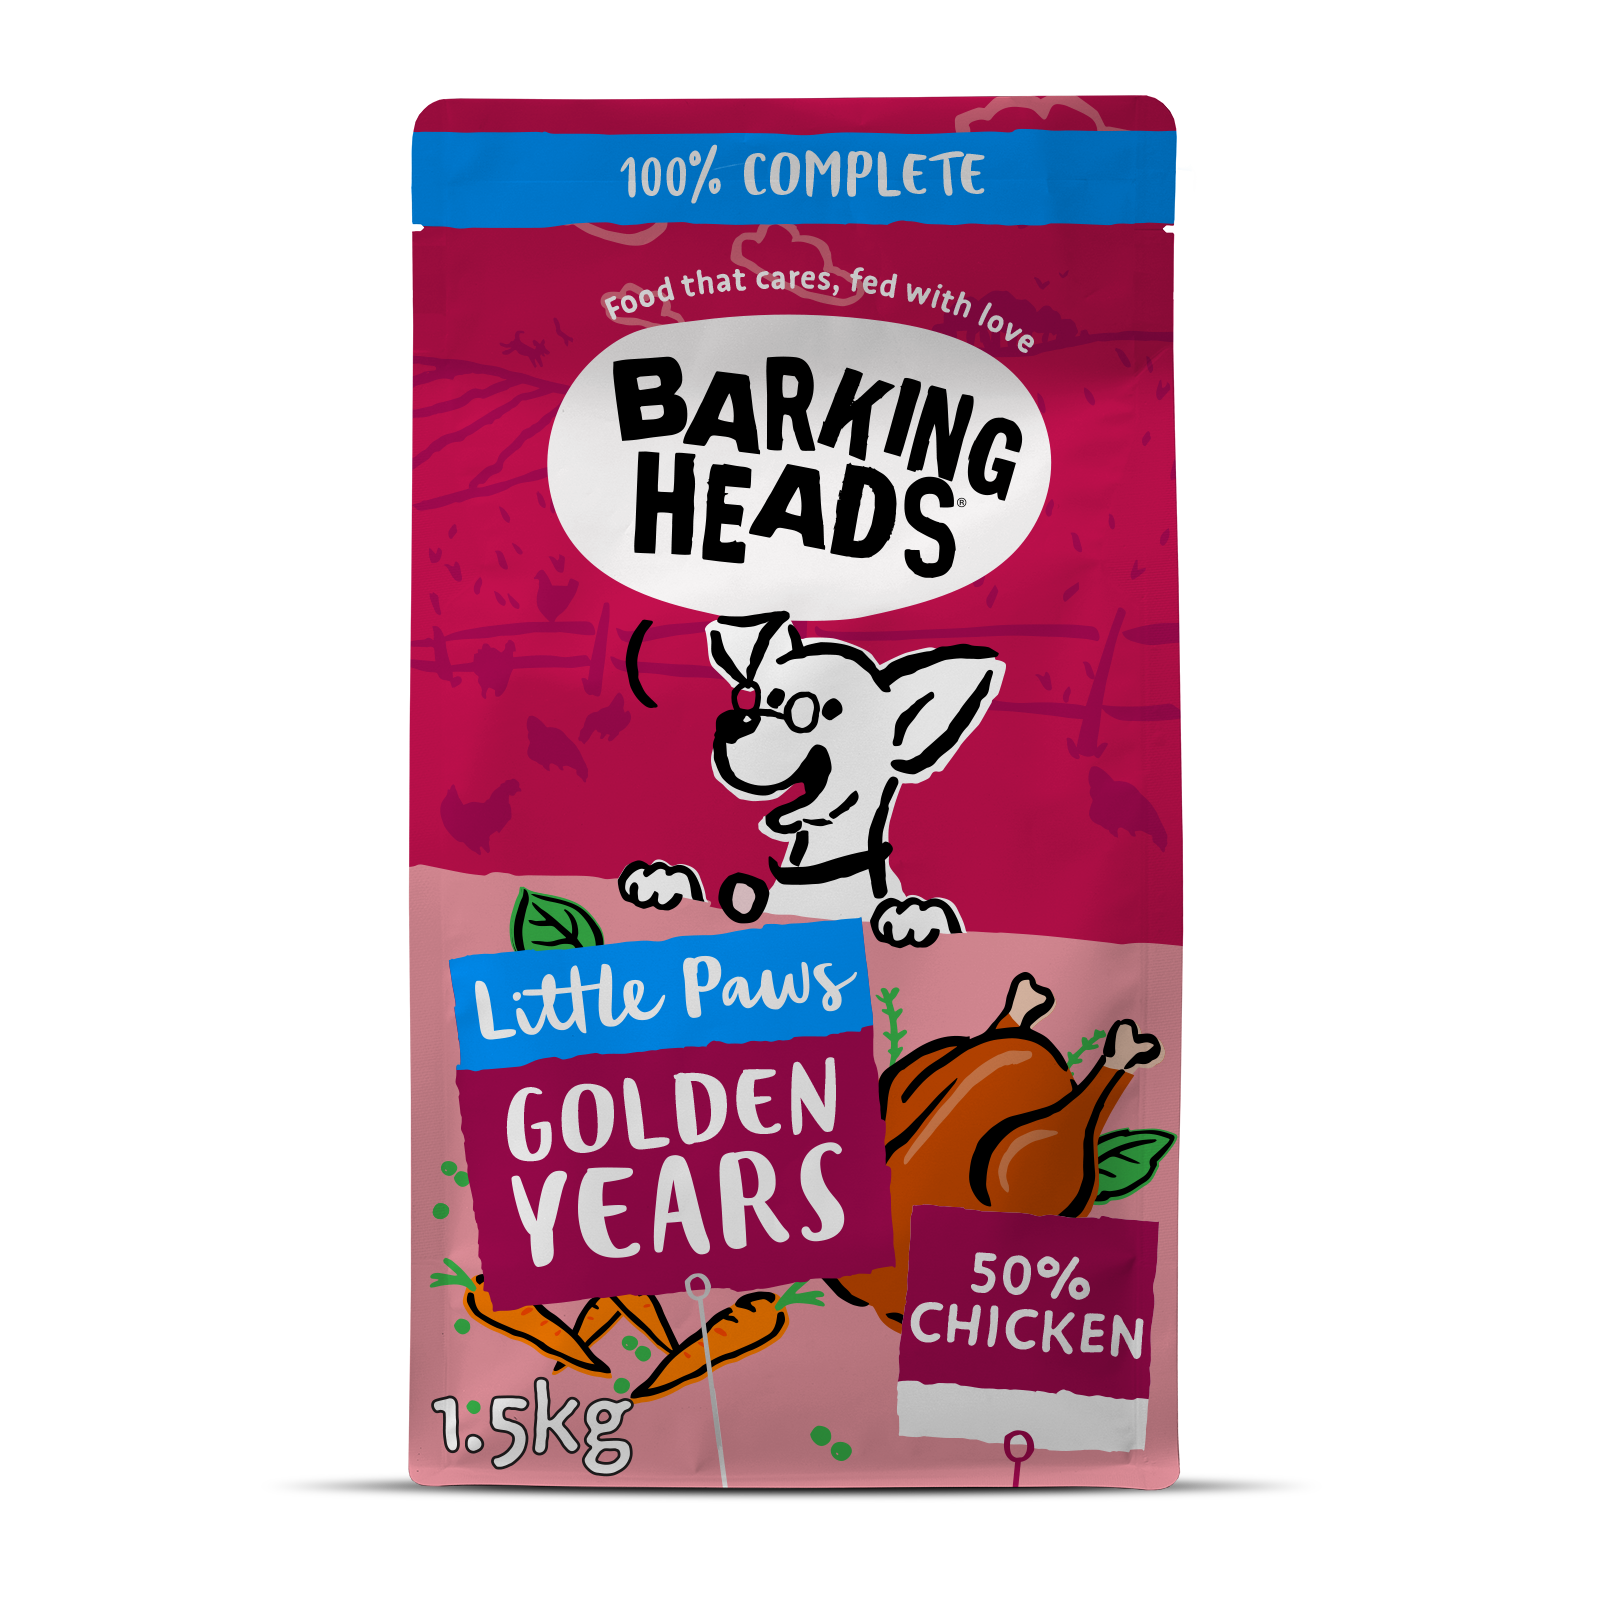 NEW - Barking Heads Little Paws Golden Years Chicken